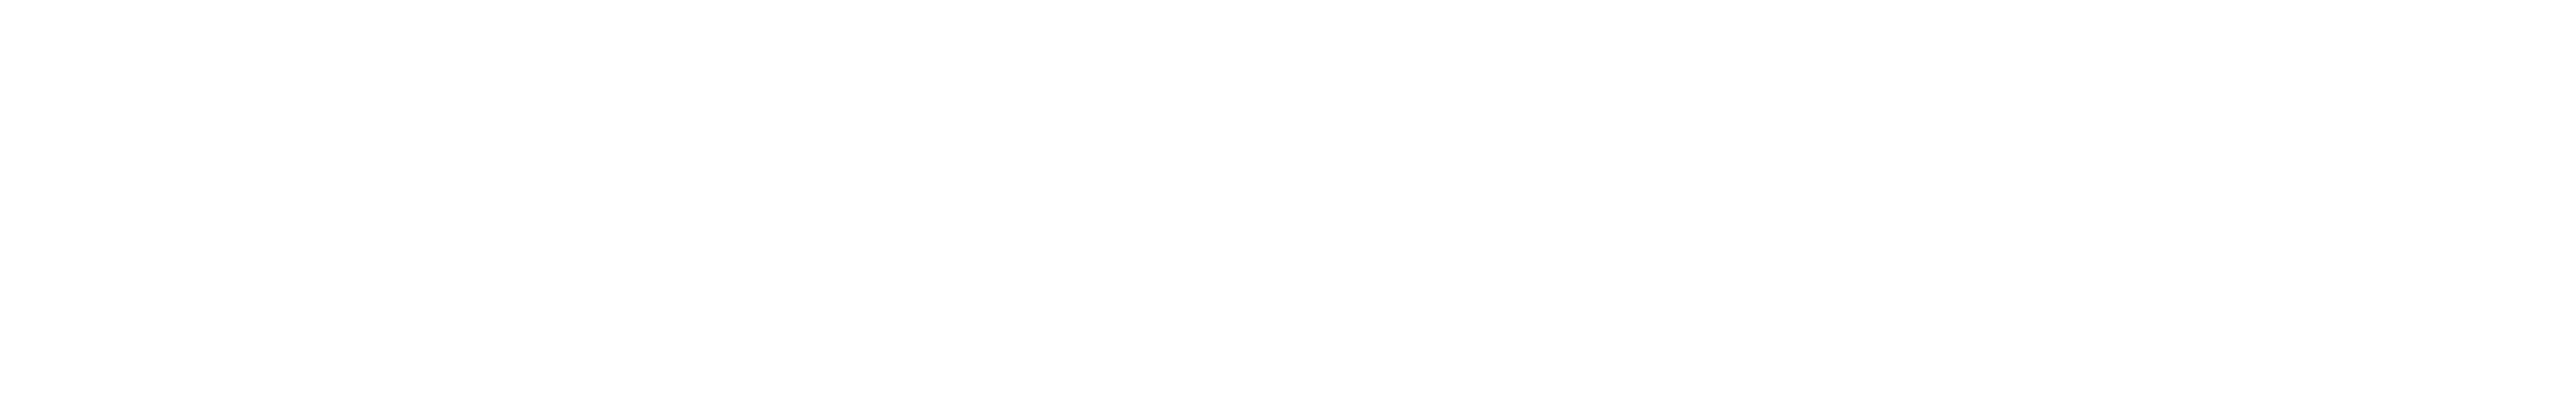 GrabRentals_Final_Main_Logo_2019_RGB_white_horizontal-012